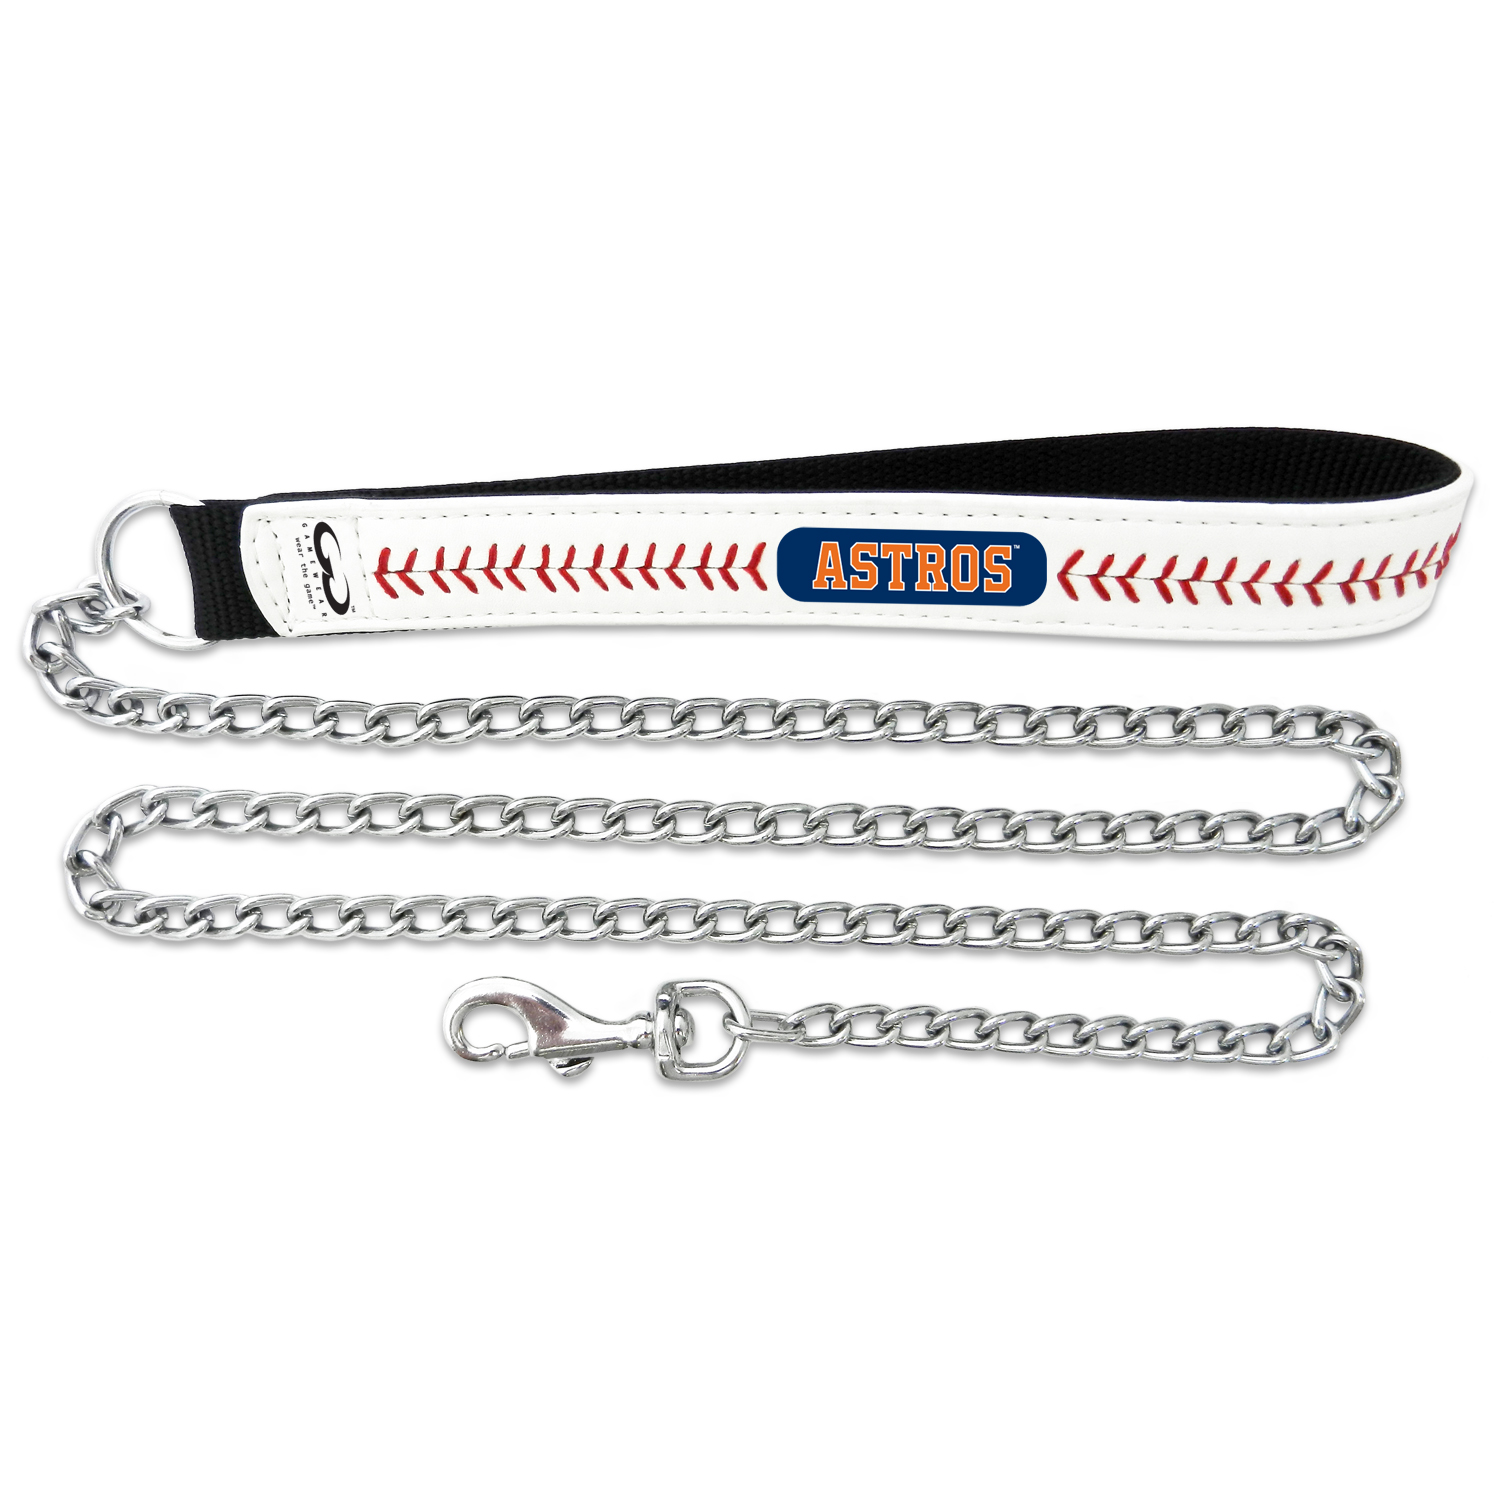 GAMEWEAR Houston Astros Baseball Leather Chain Leash